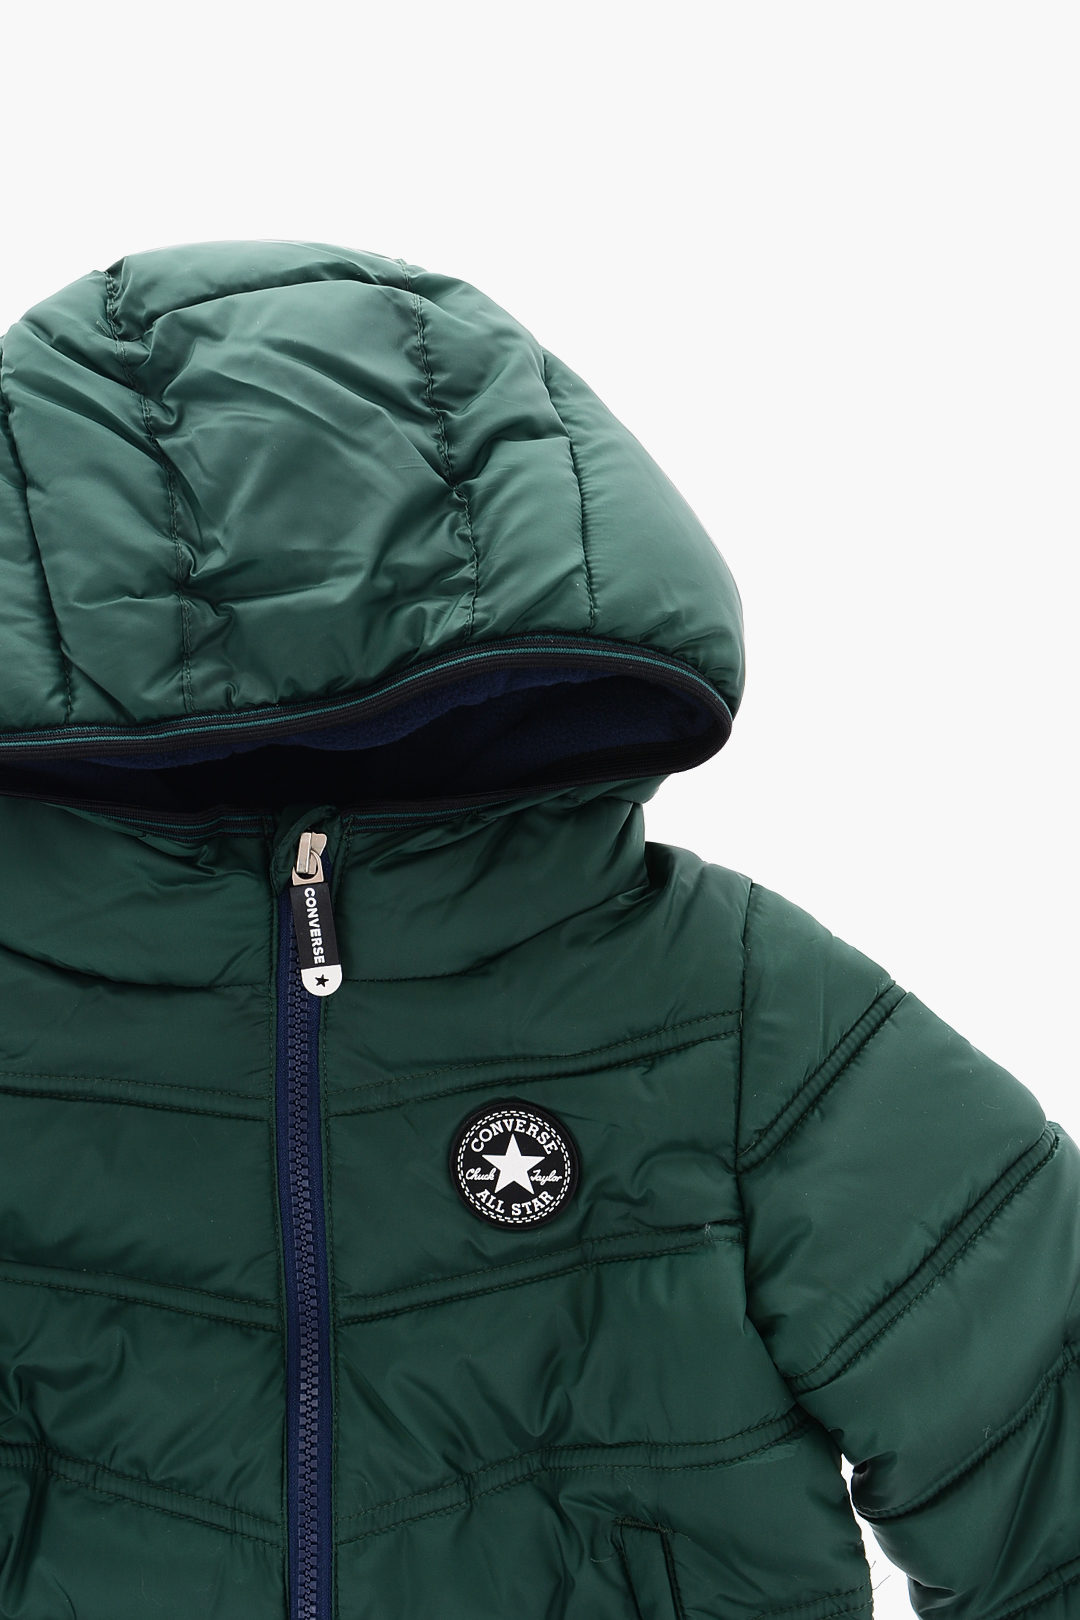 Joseph Banks Van God kraai Converse KIDS ALL STAR CHUCK TAYLOR Padded Jacket with Fleece Inner boys -  Glamood Outlet